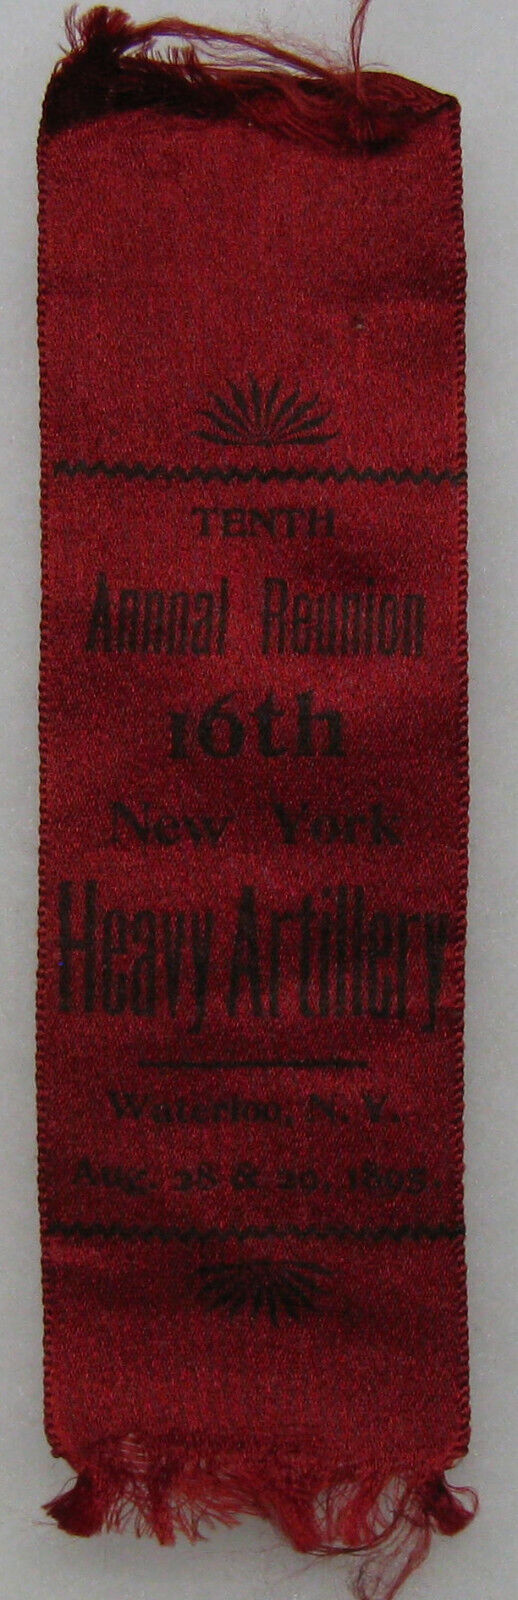 Reunion Ribbon, 16th New York Heavy Artillery, 1895